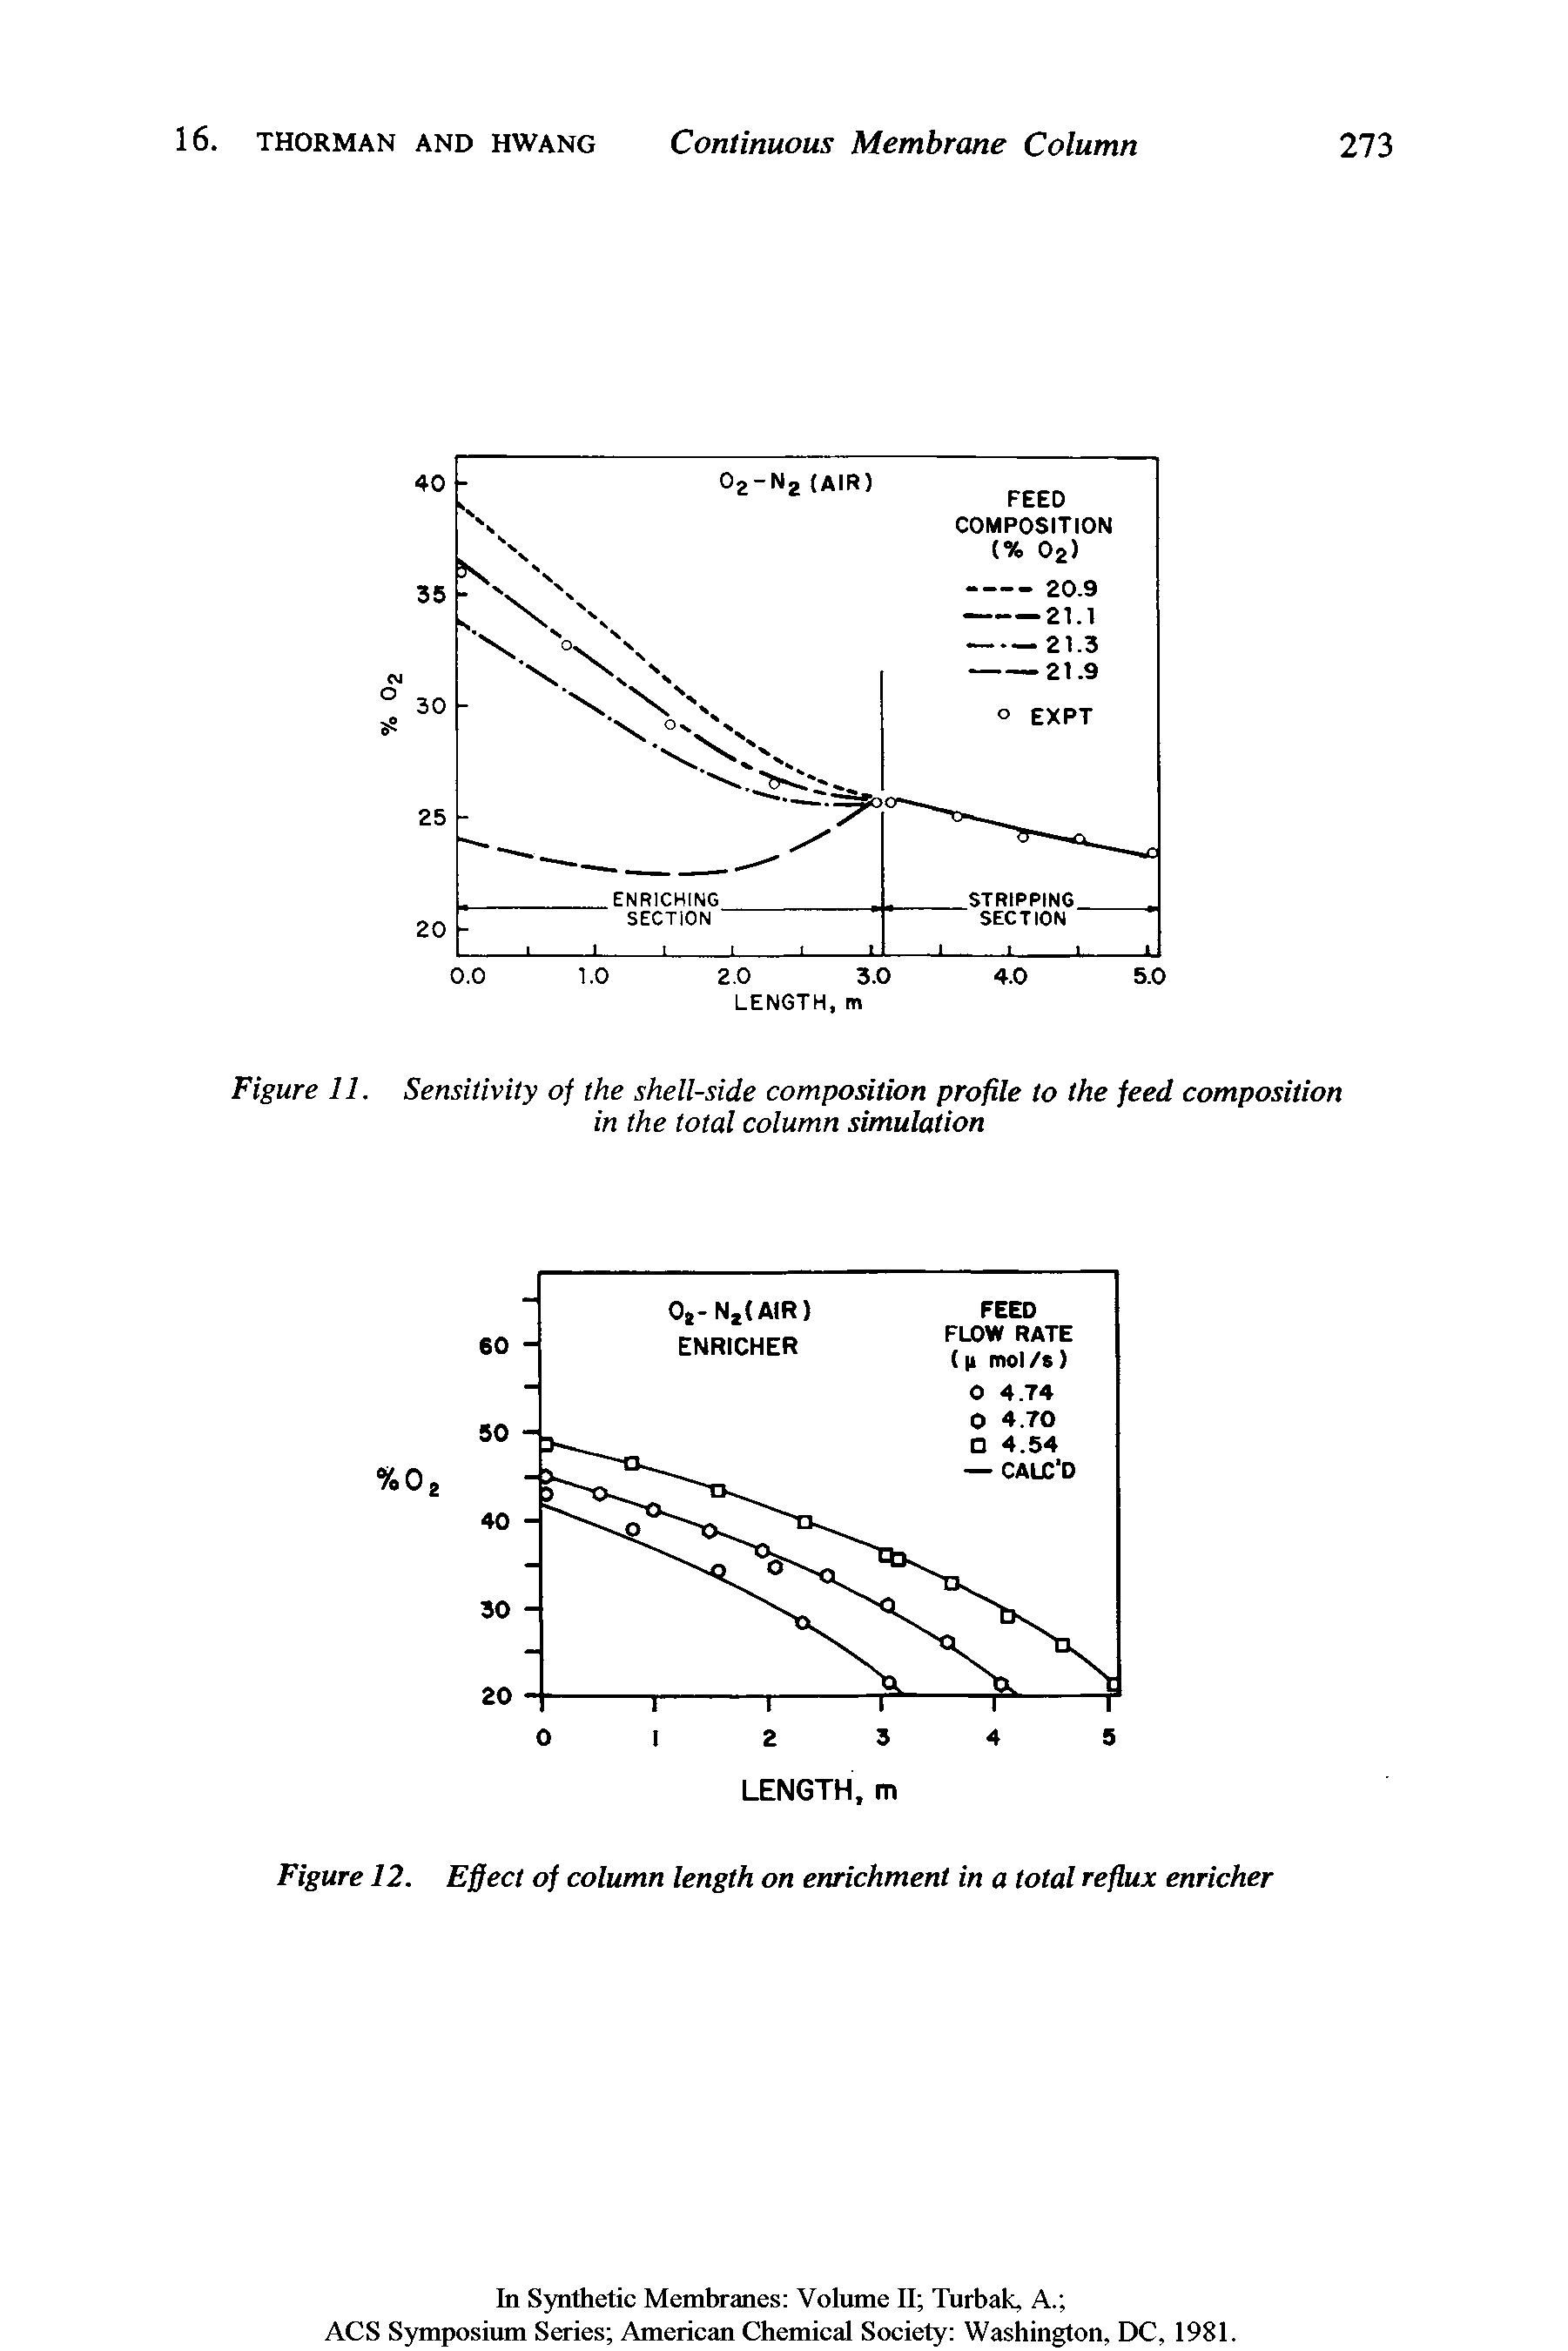 Figure 12. Effect of column length on enrichment in a total reflux enricher...